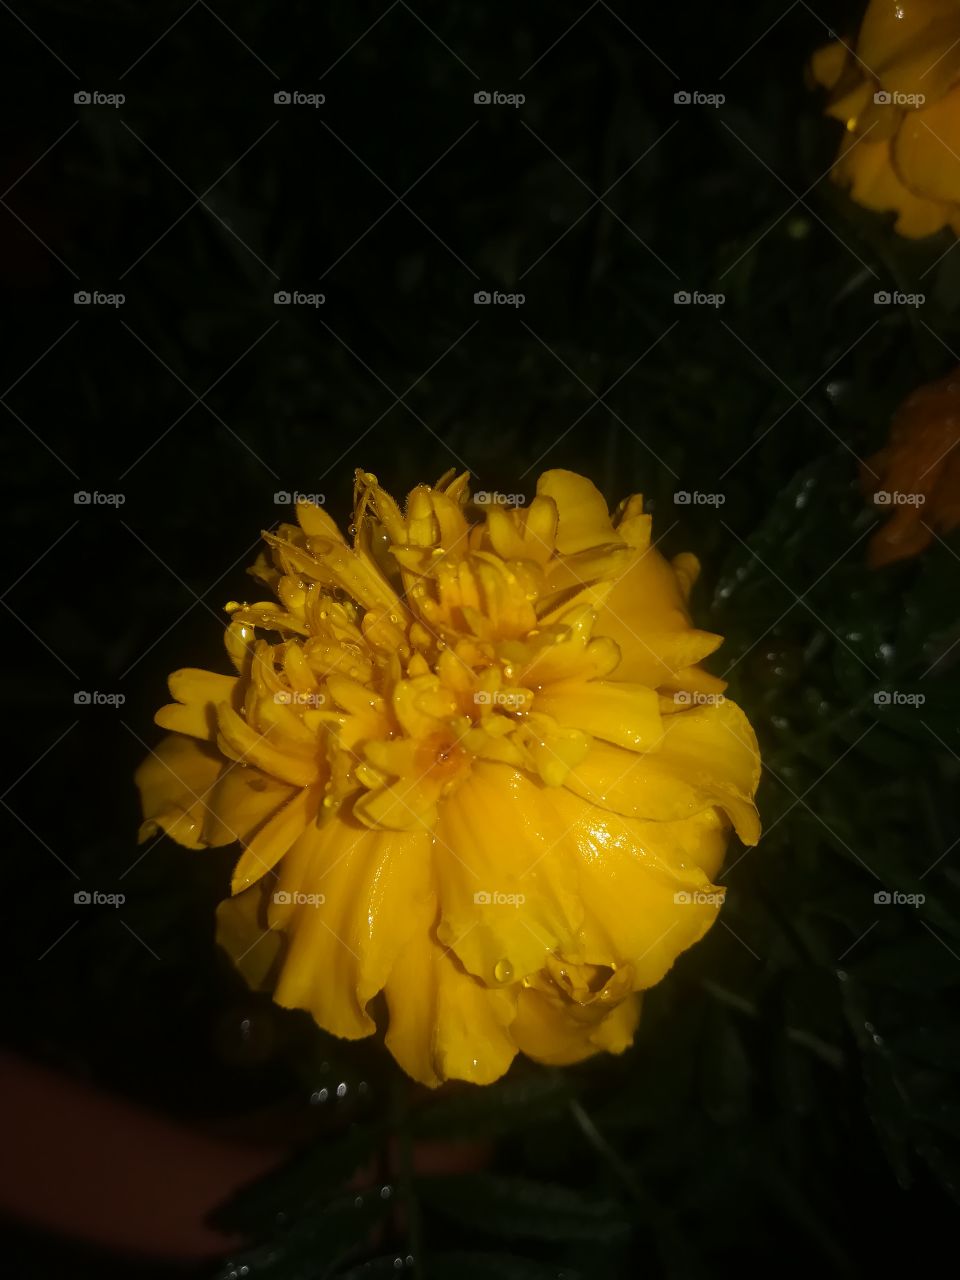 Jello flowers by night